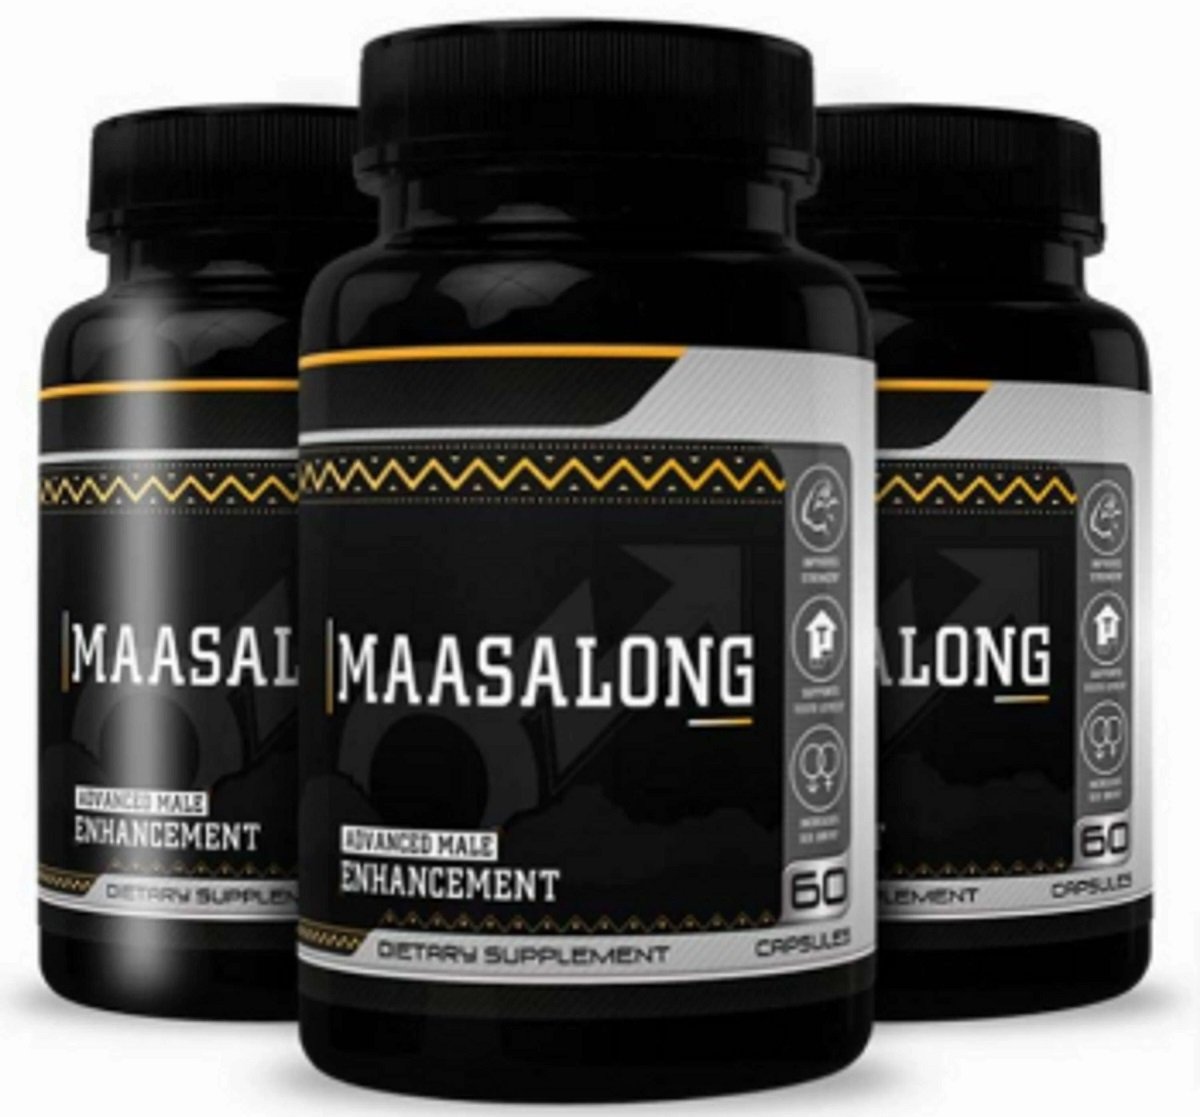 Maasalong Review – Advanced Formula Pills